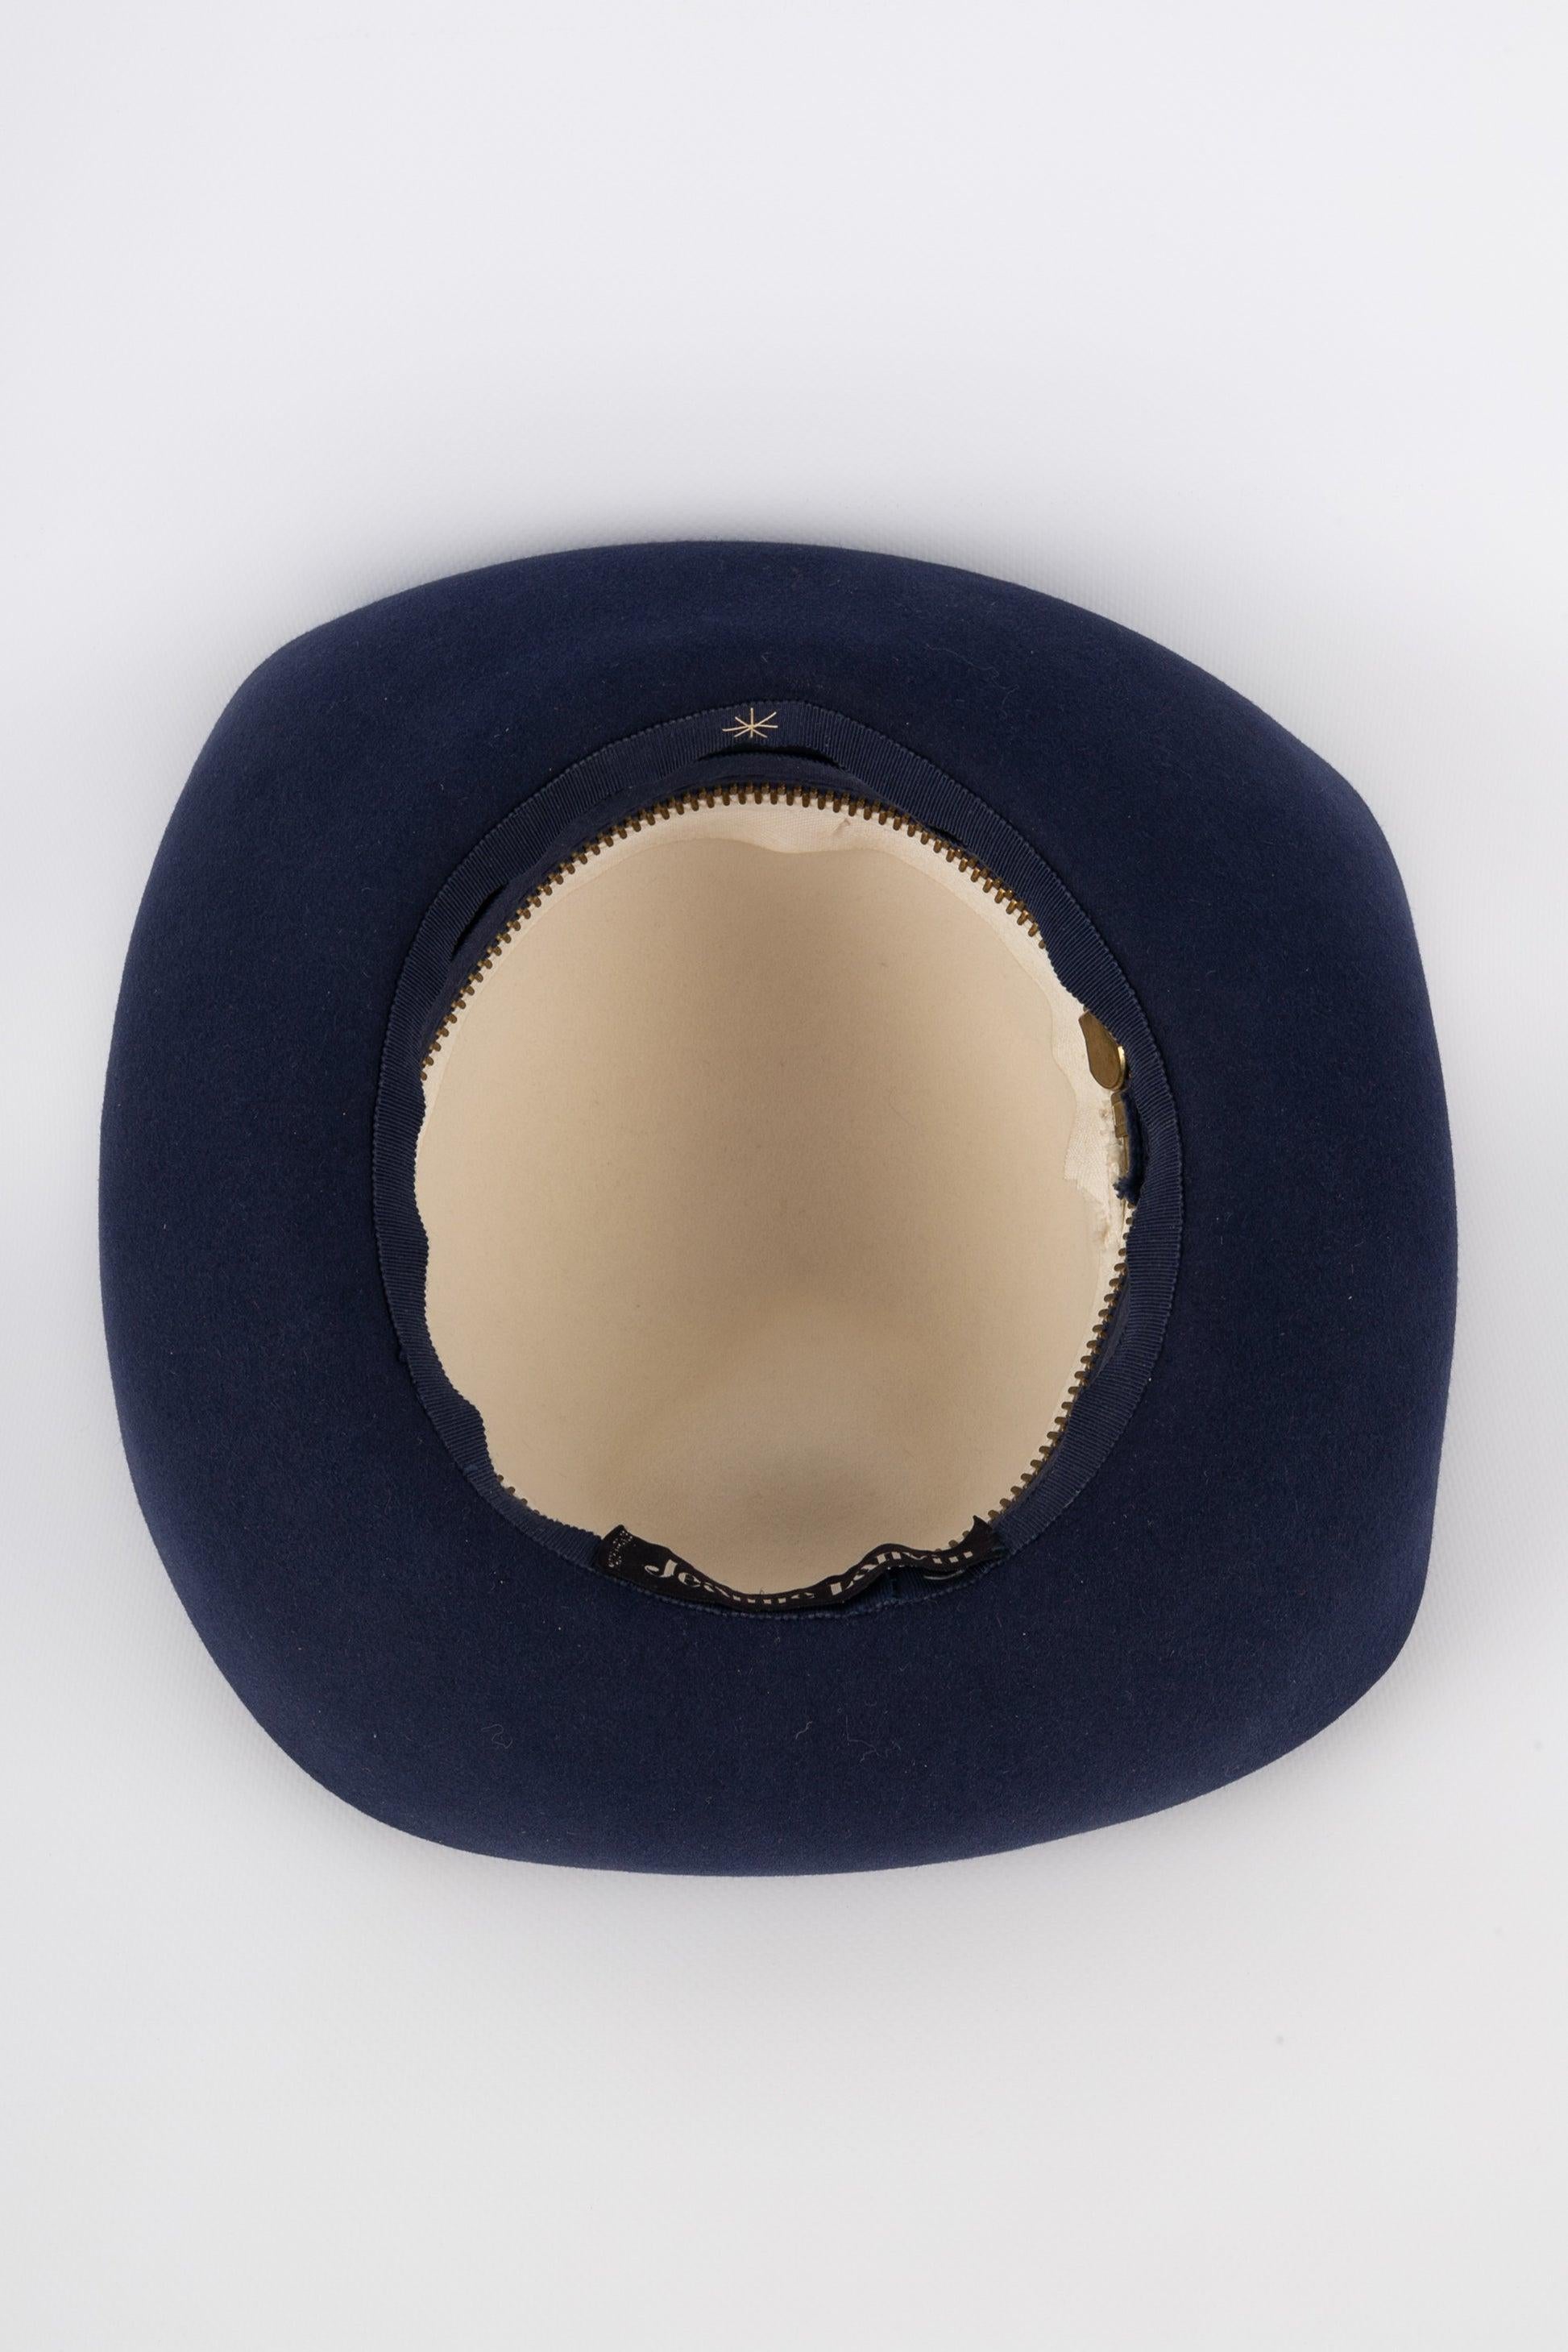 Lanvin Blue and White Felt Hat For Sale 4